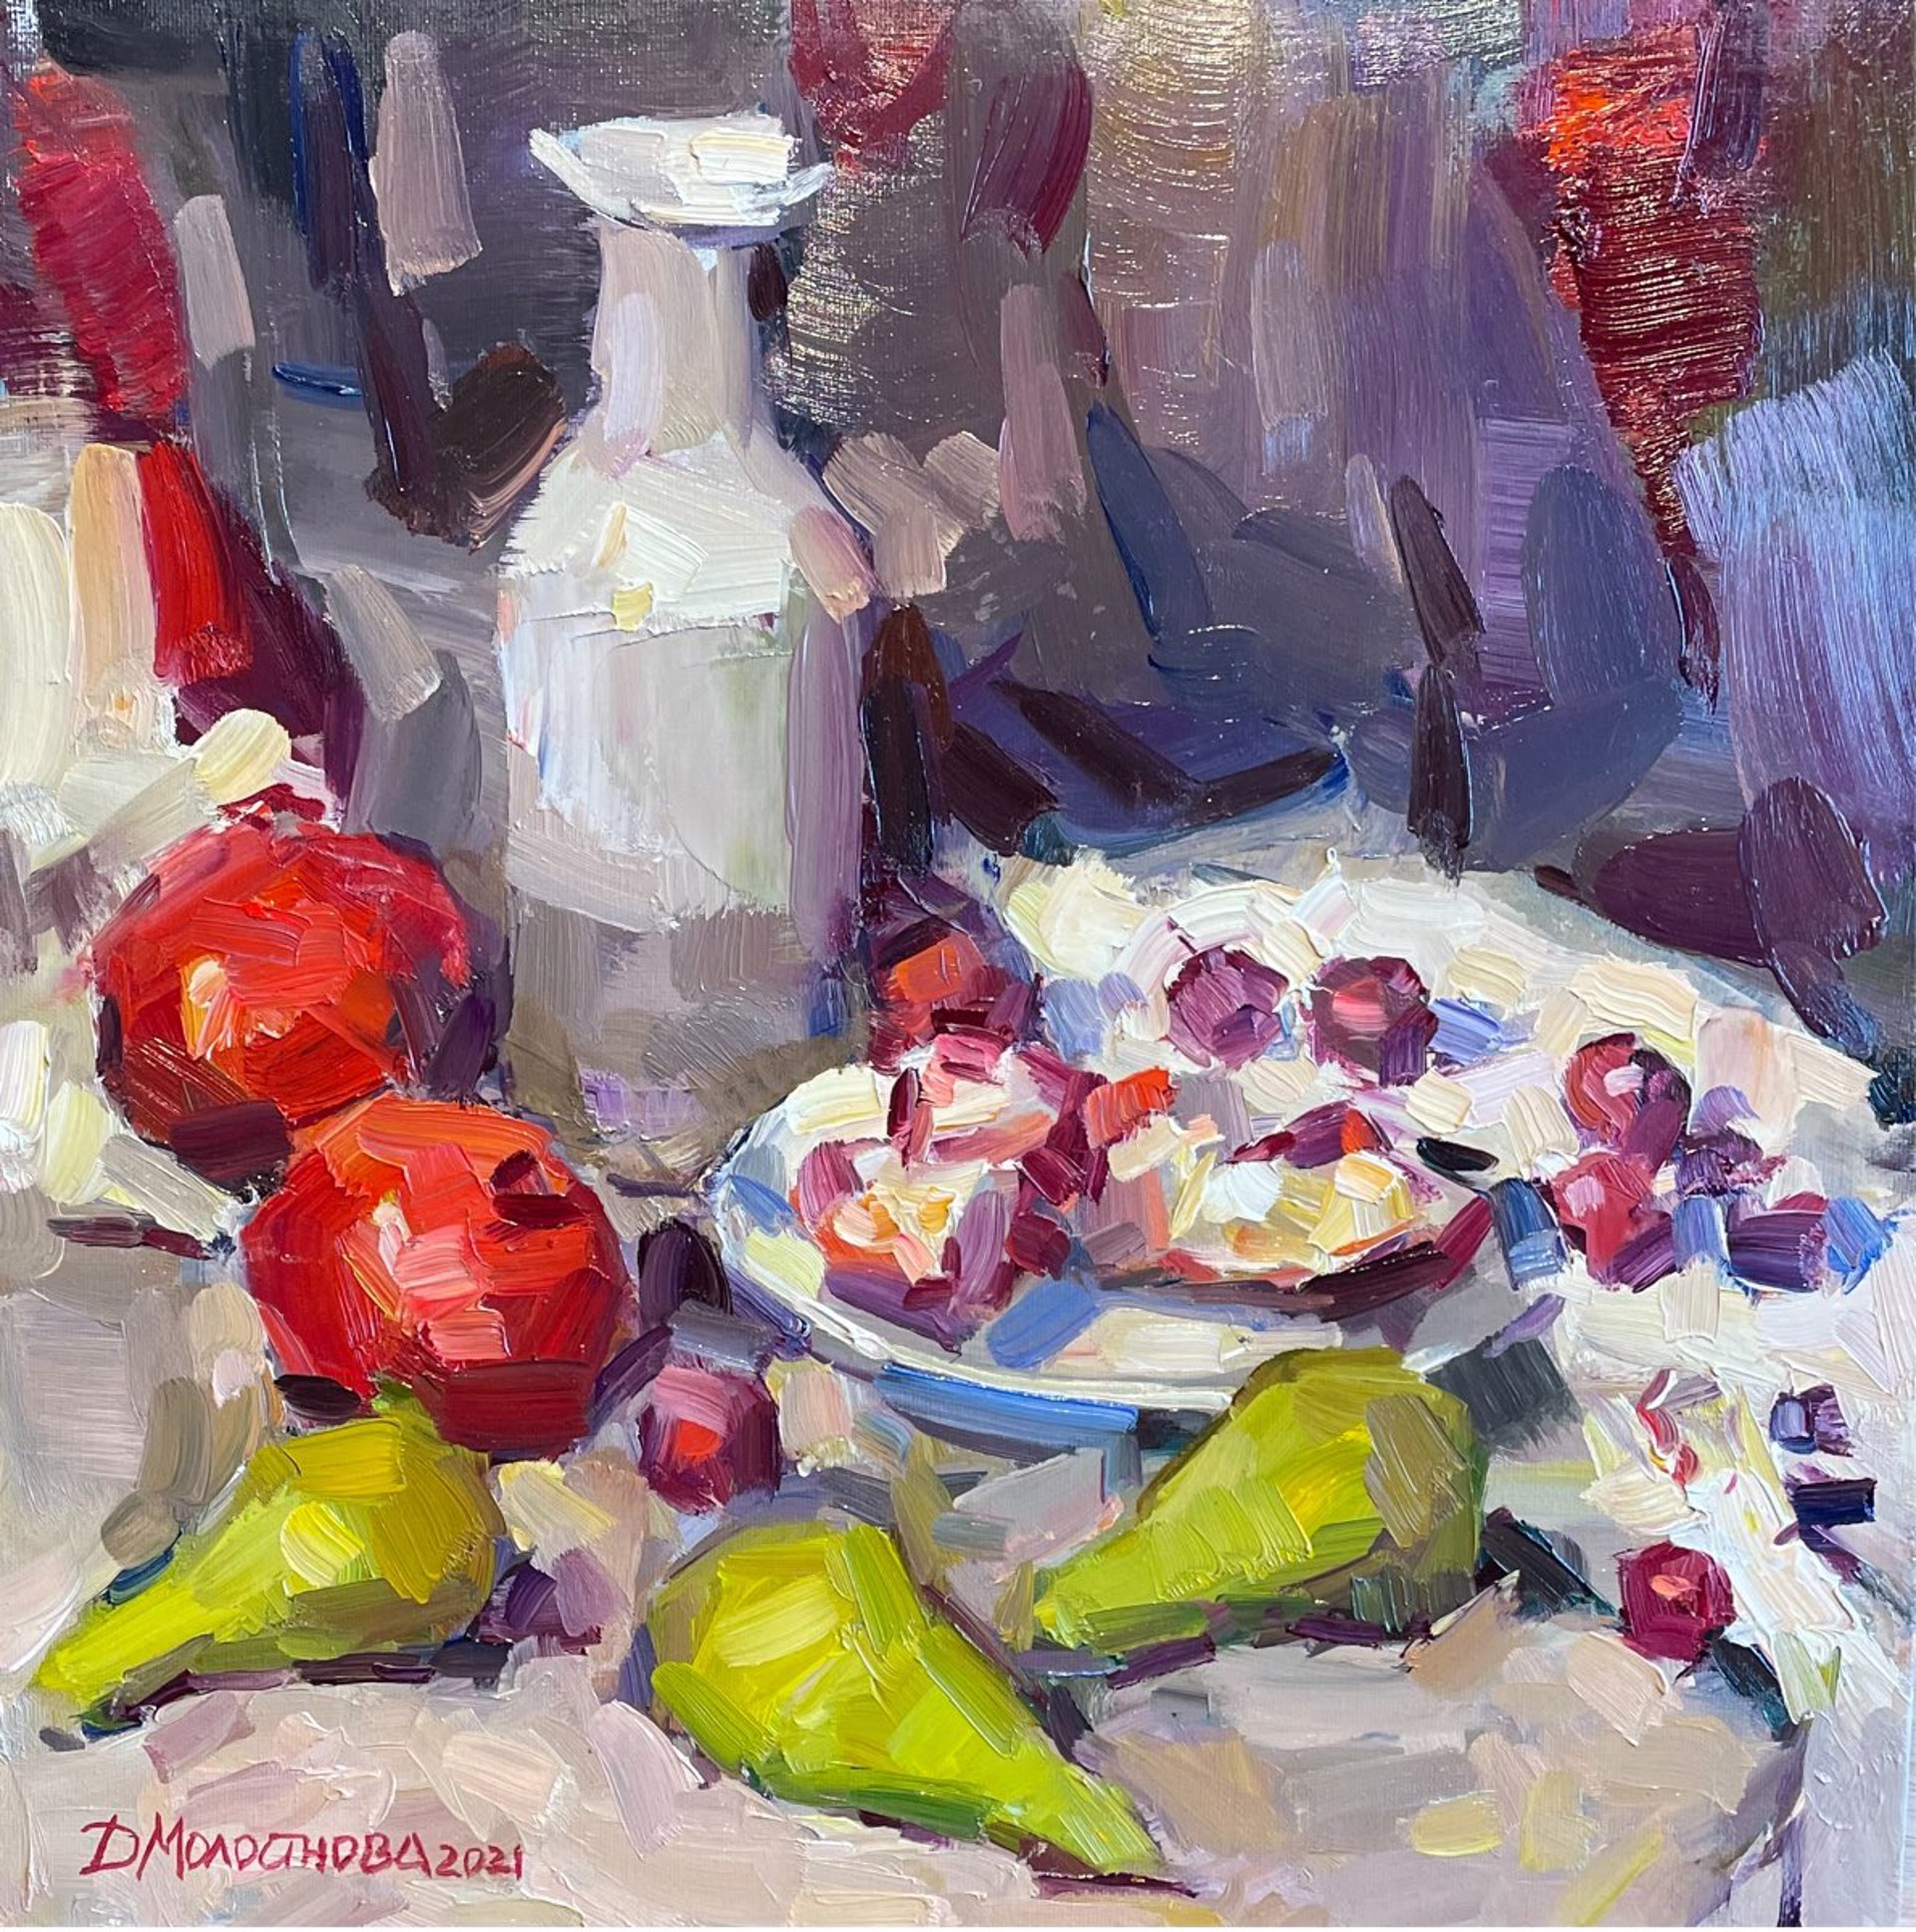 Three Pears by Daria Molostnova